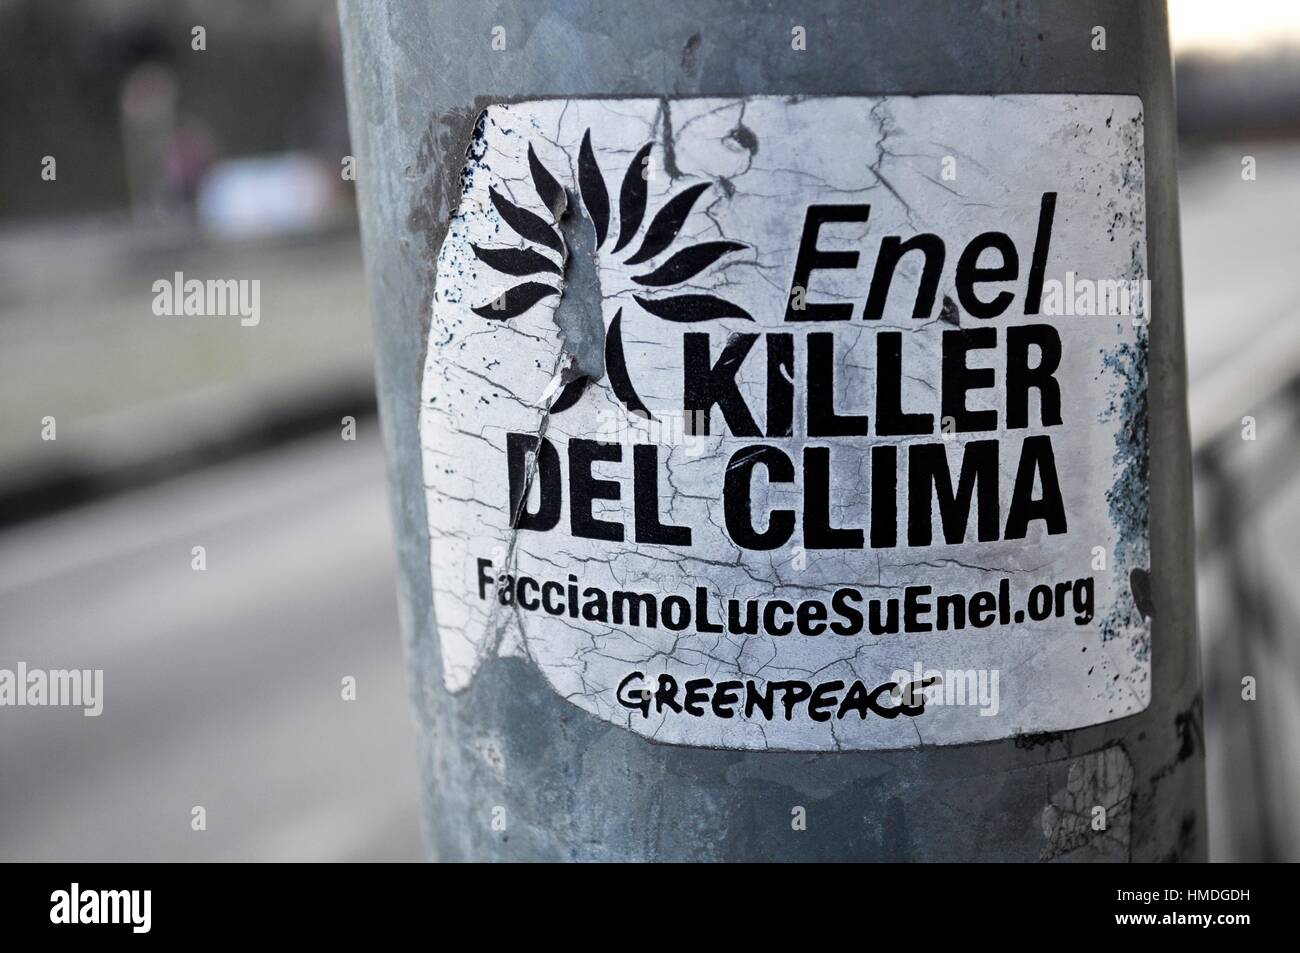 Italien greenpeace -Fotos und -Bildmaterial in hoher Auflösung – Alamy